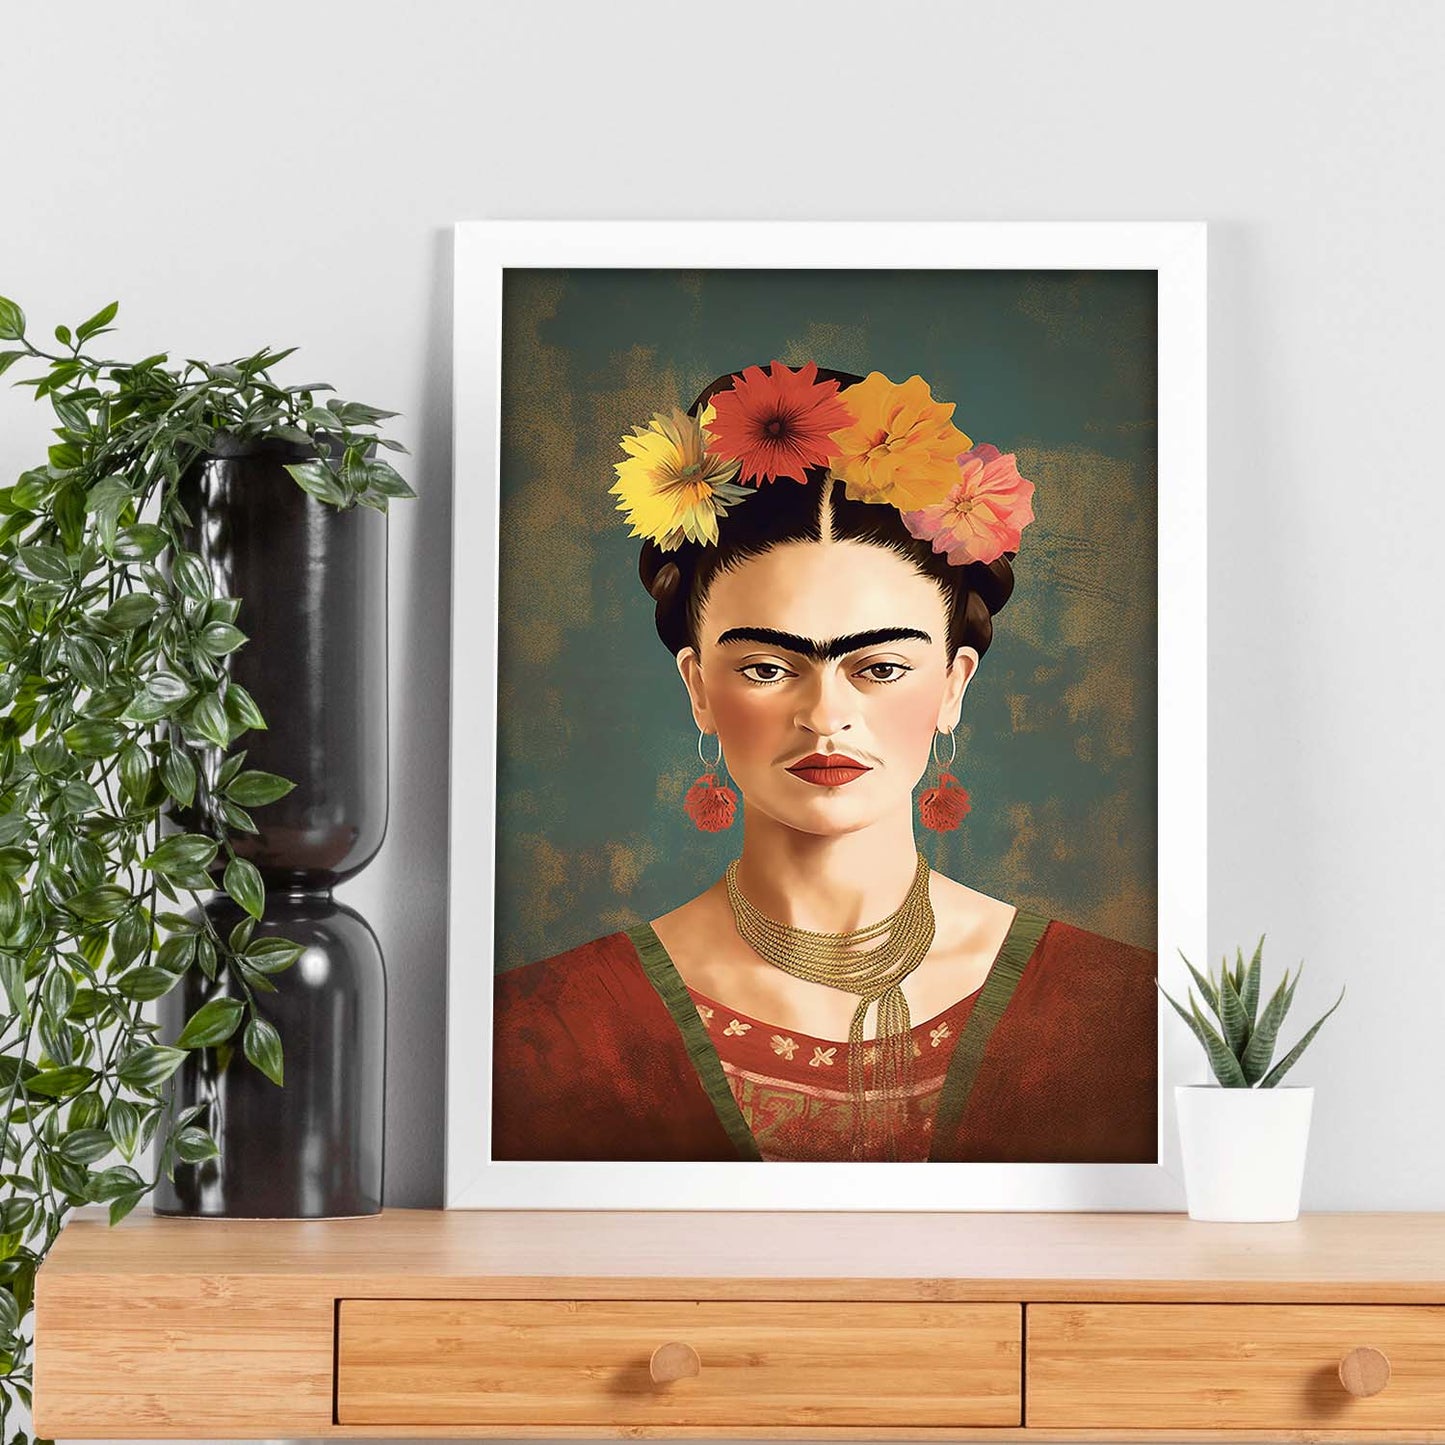 Póster Frida de alta calidad hecho en España